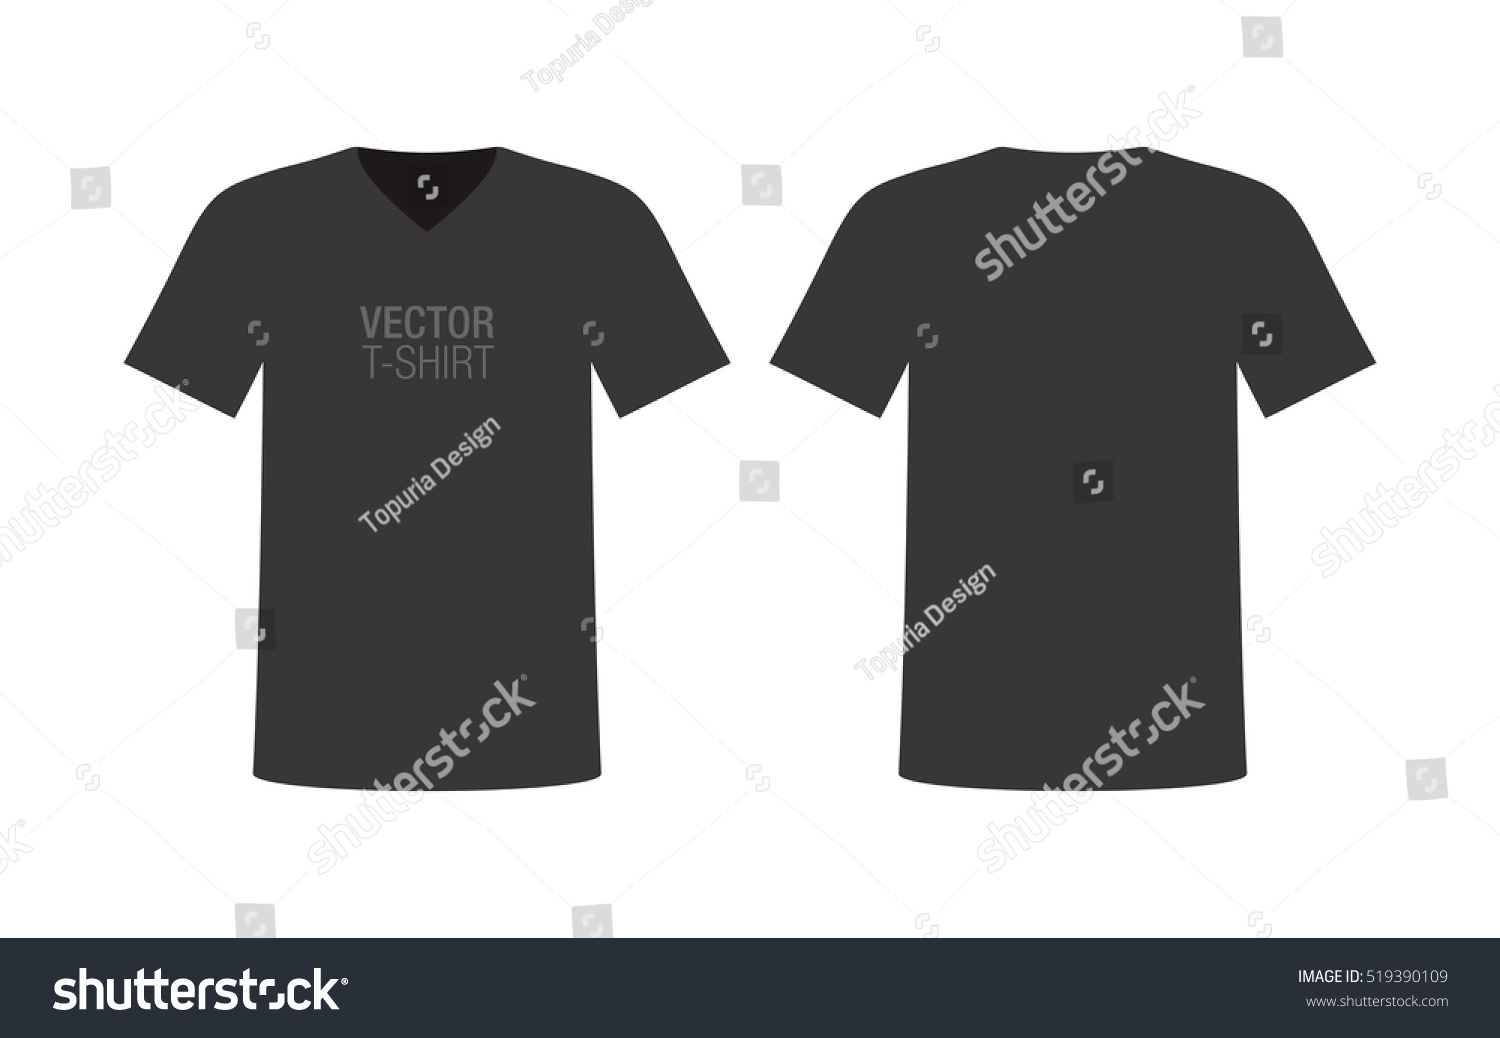 Download Vector Vneck Tshirt Mockup Mens Black Stock Vector 519390109 - Shutterstock